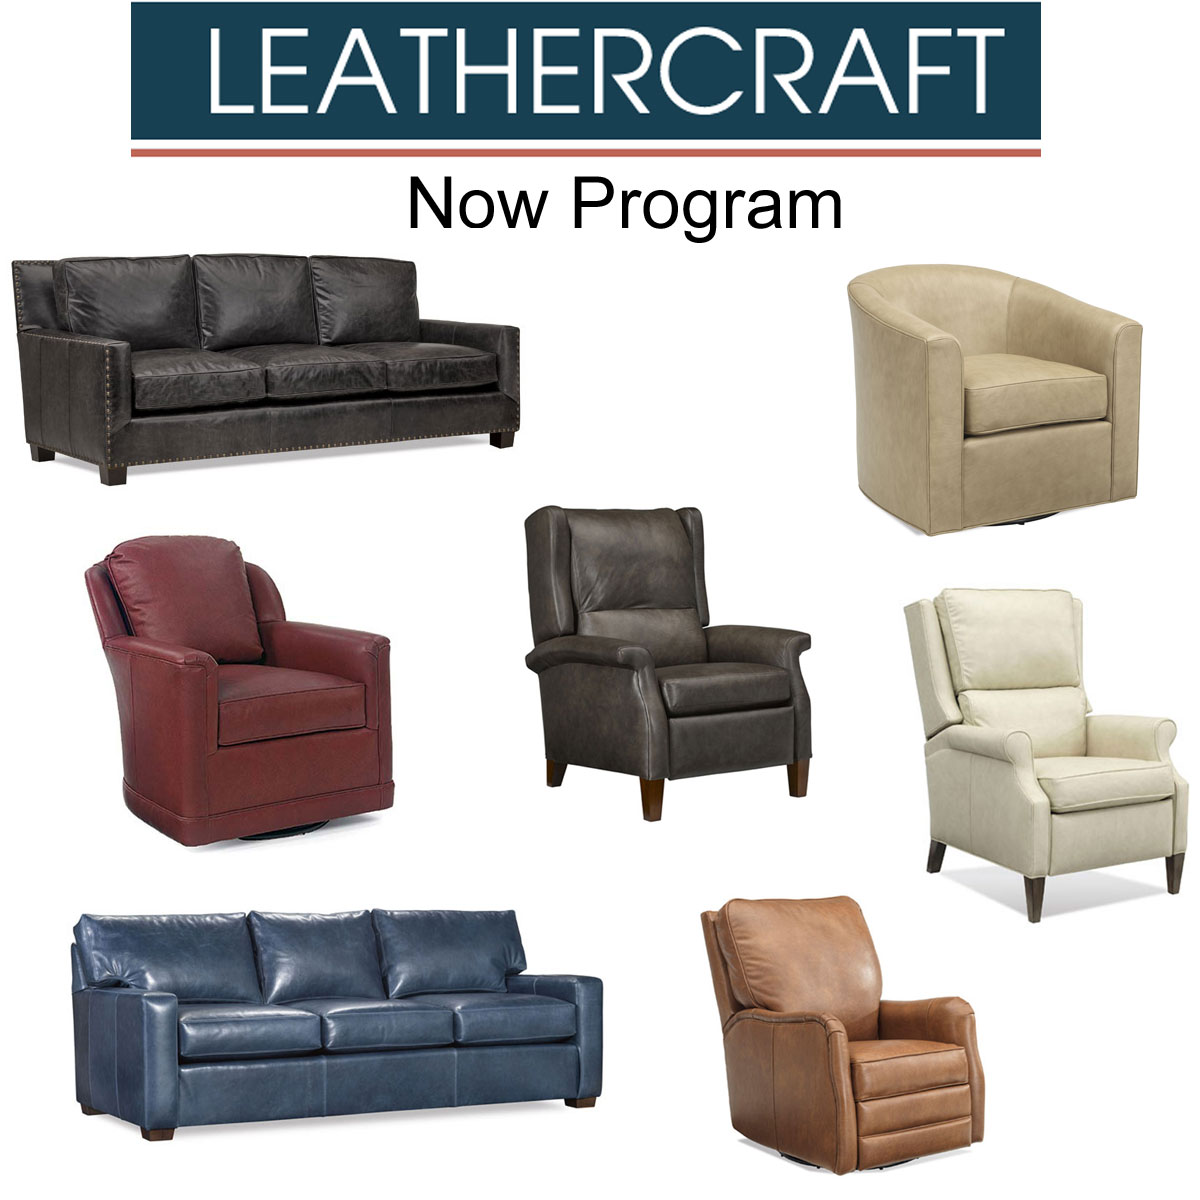 Leathercraft Now Program